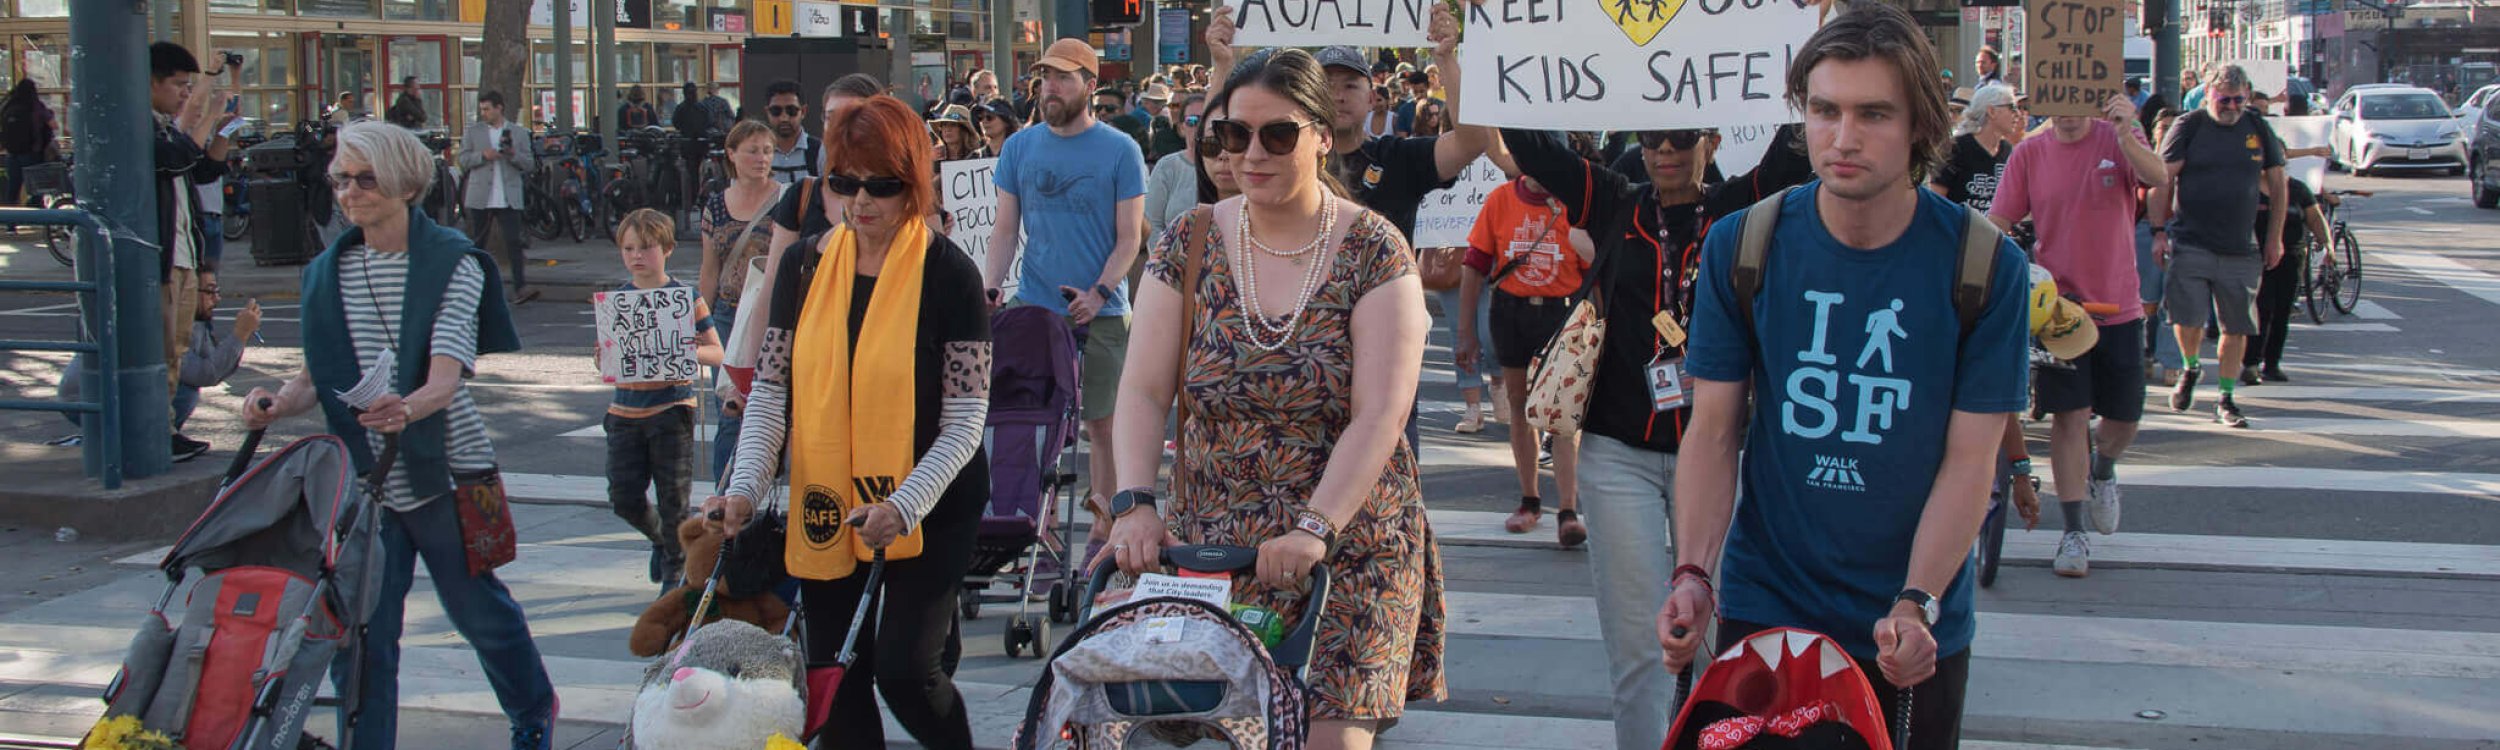 Walk SF’s three asks of City leaders to fix deadly crosswalks